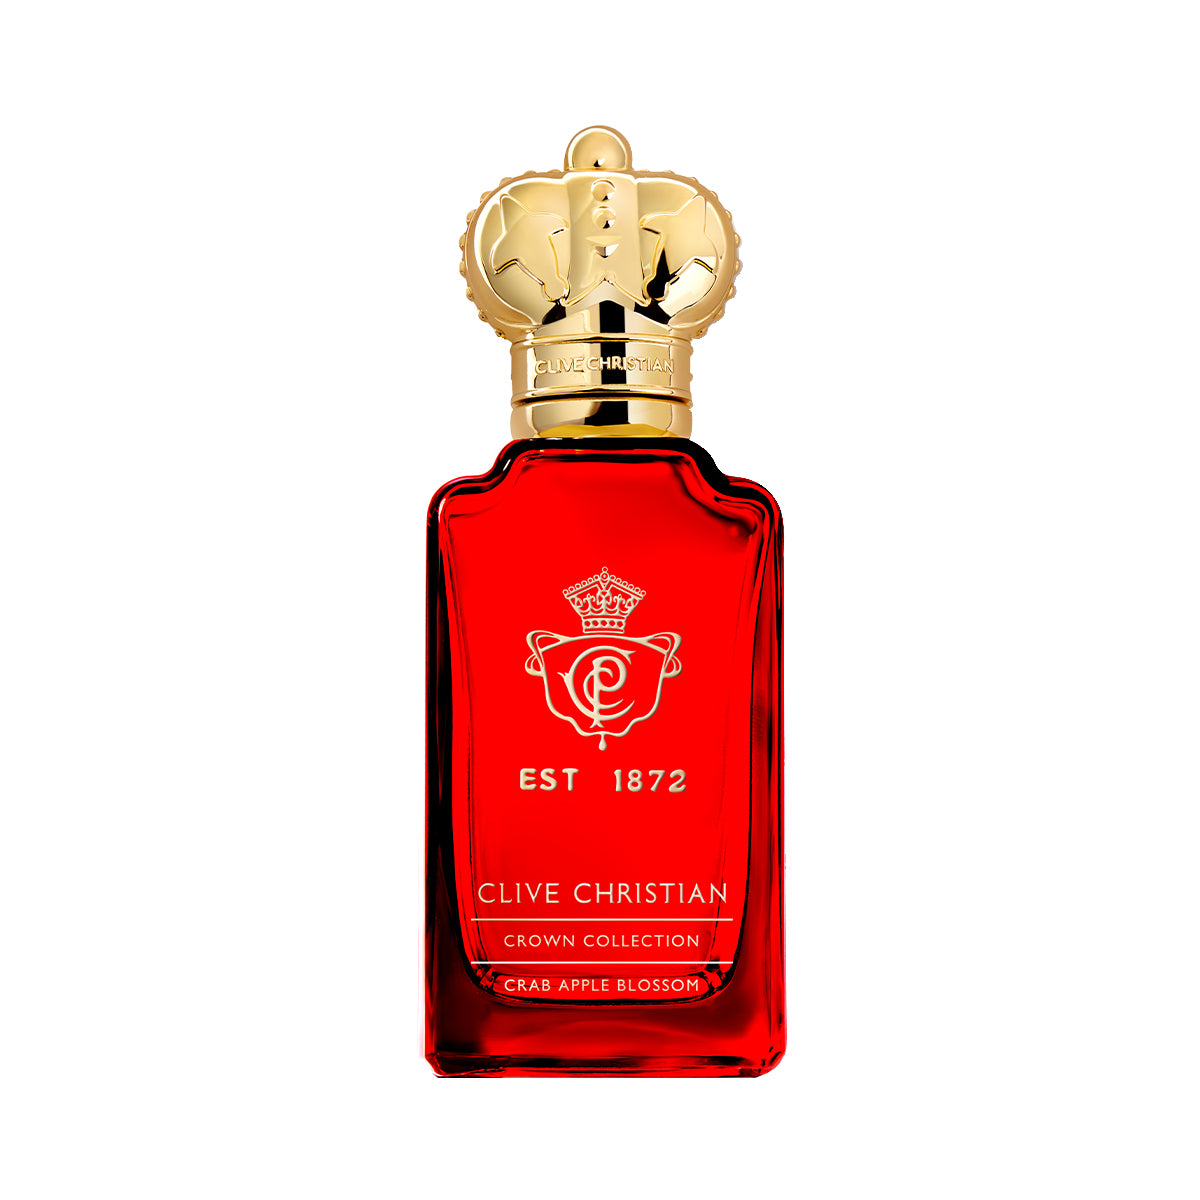 Crab Apple Blossom - Clive Christian - Parfum 50 ml